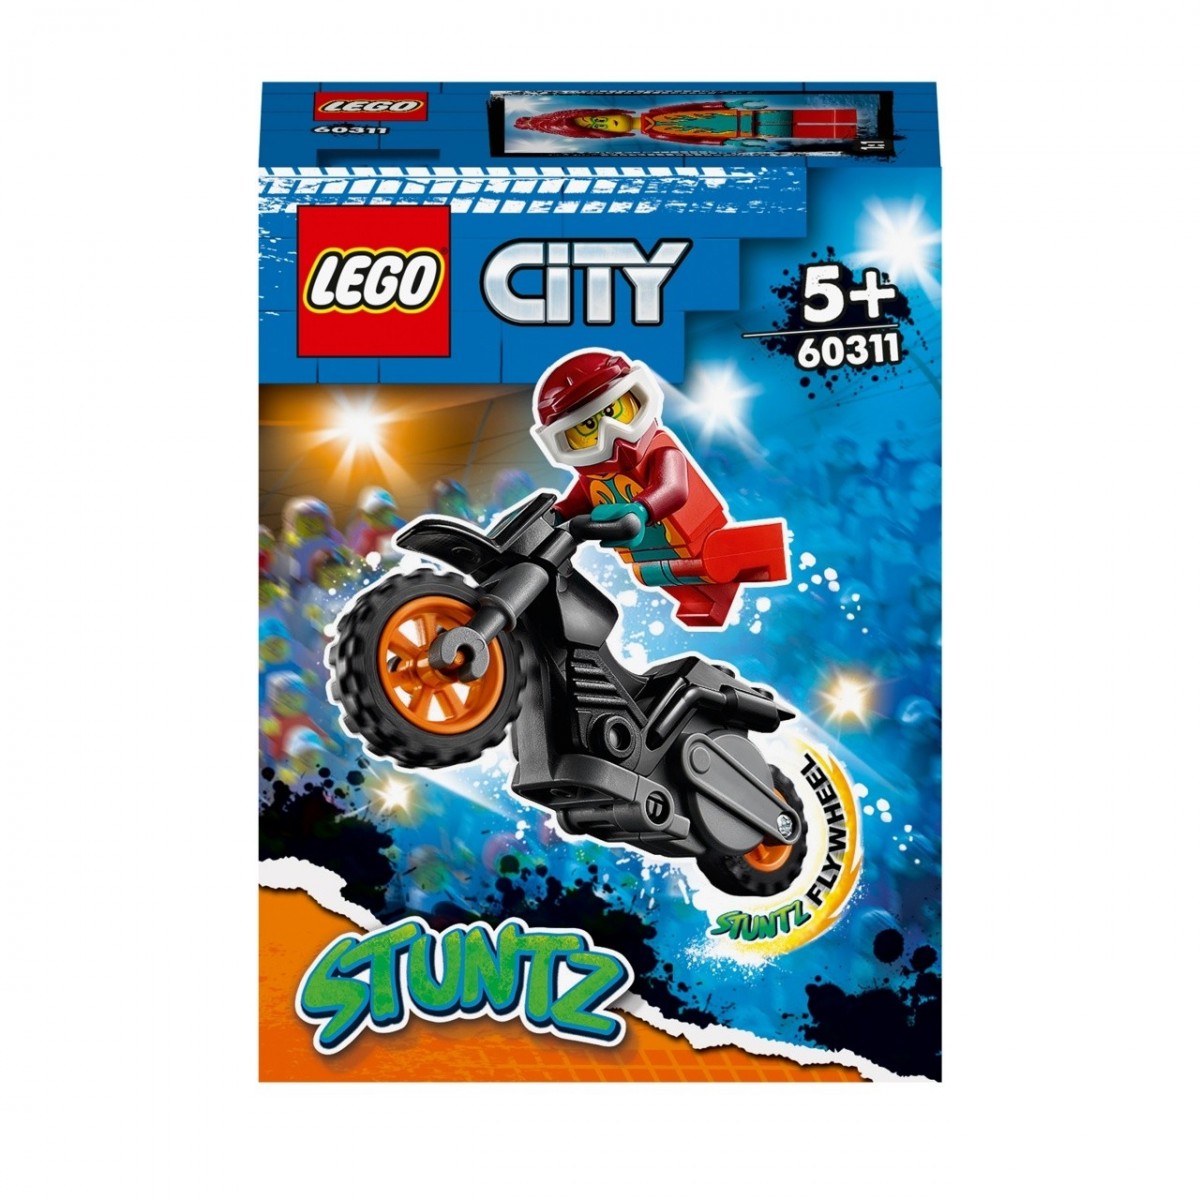 60311 LEGO City Stunt Bike antincendio